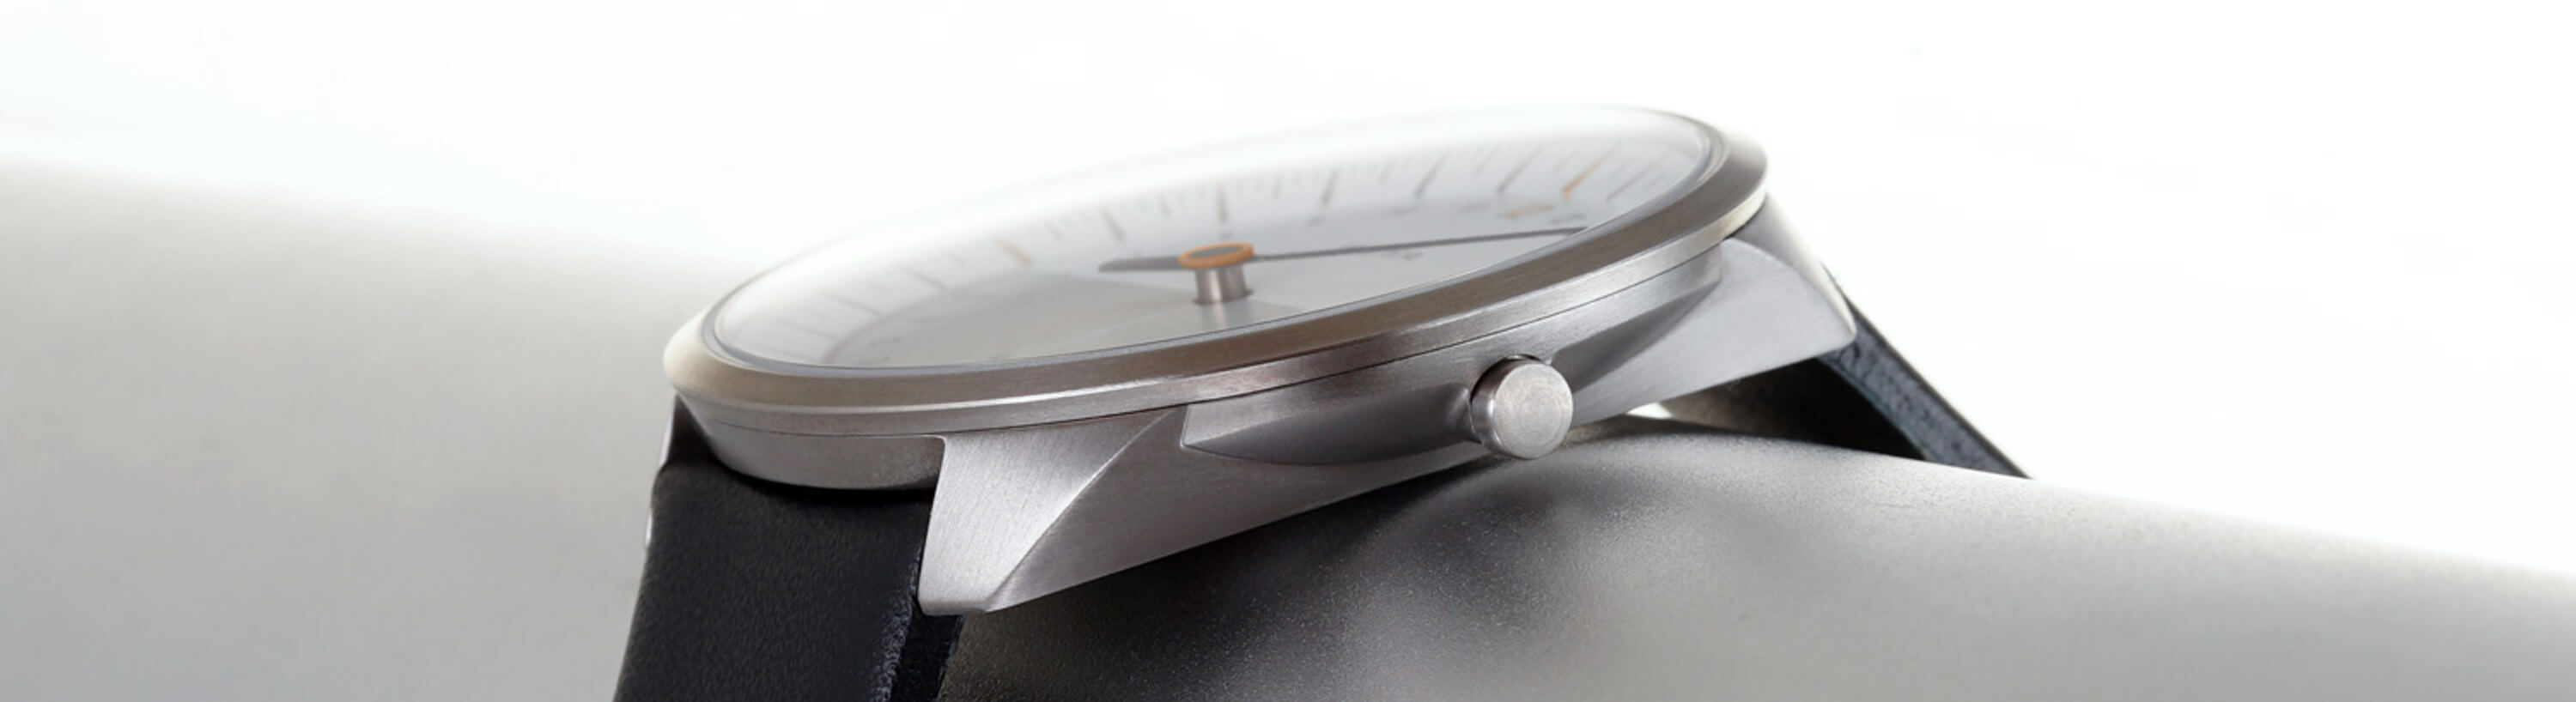 UNO 24 Single Hand Quartz Titanium Wrist Watch